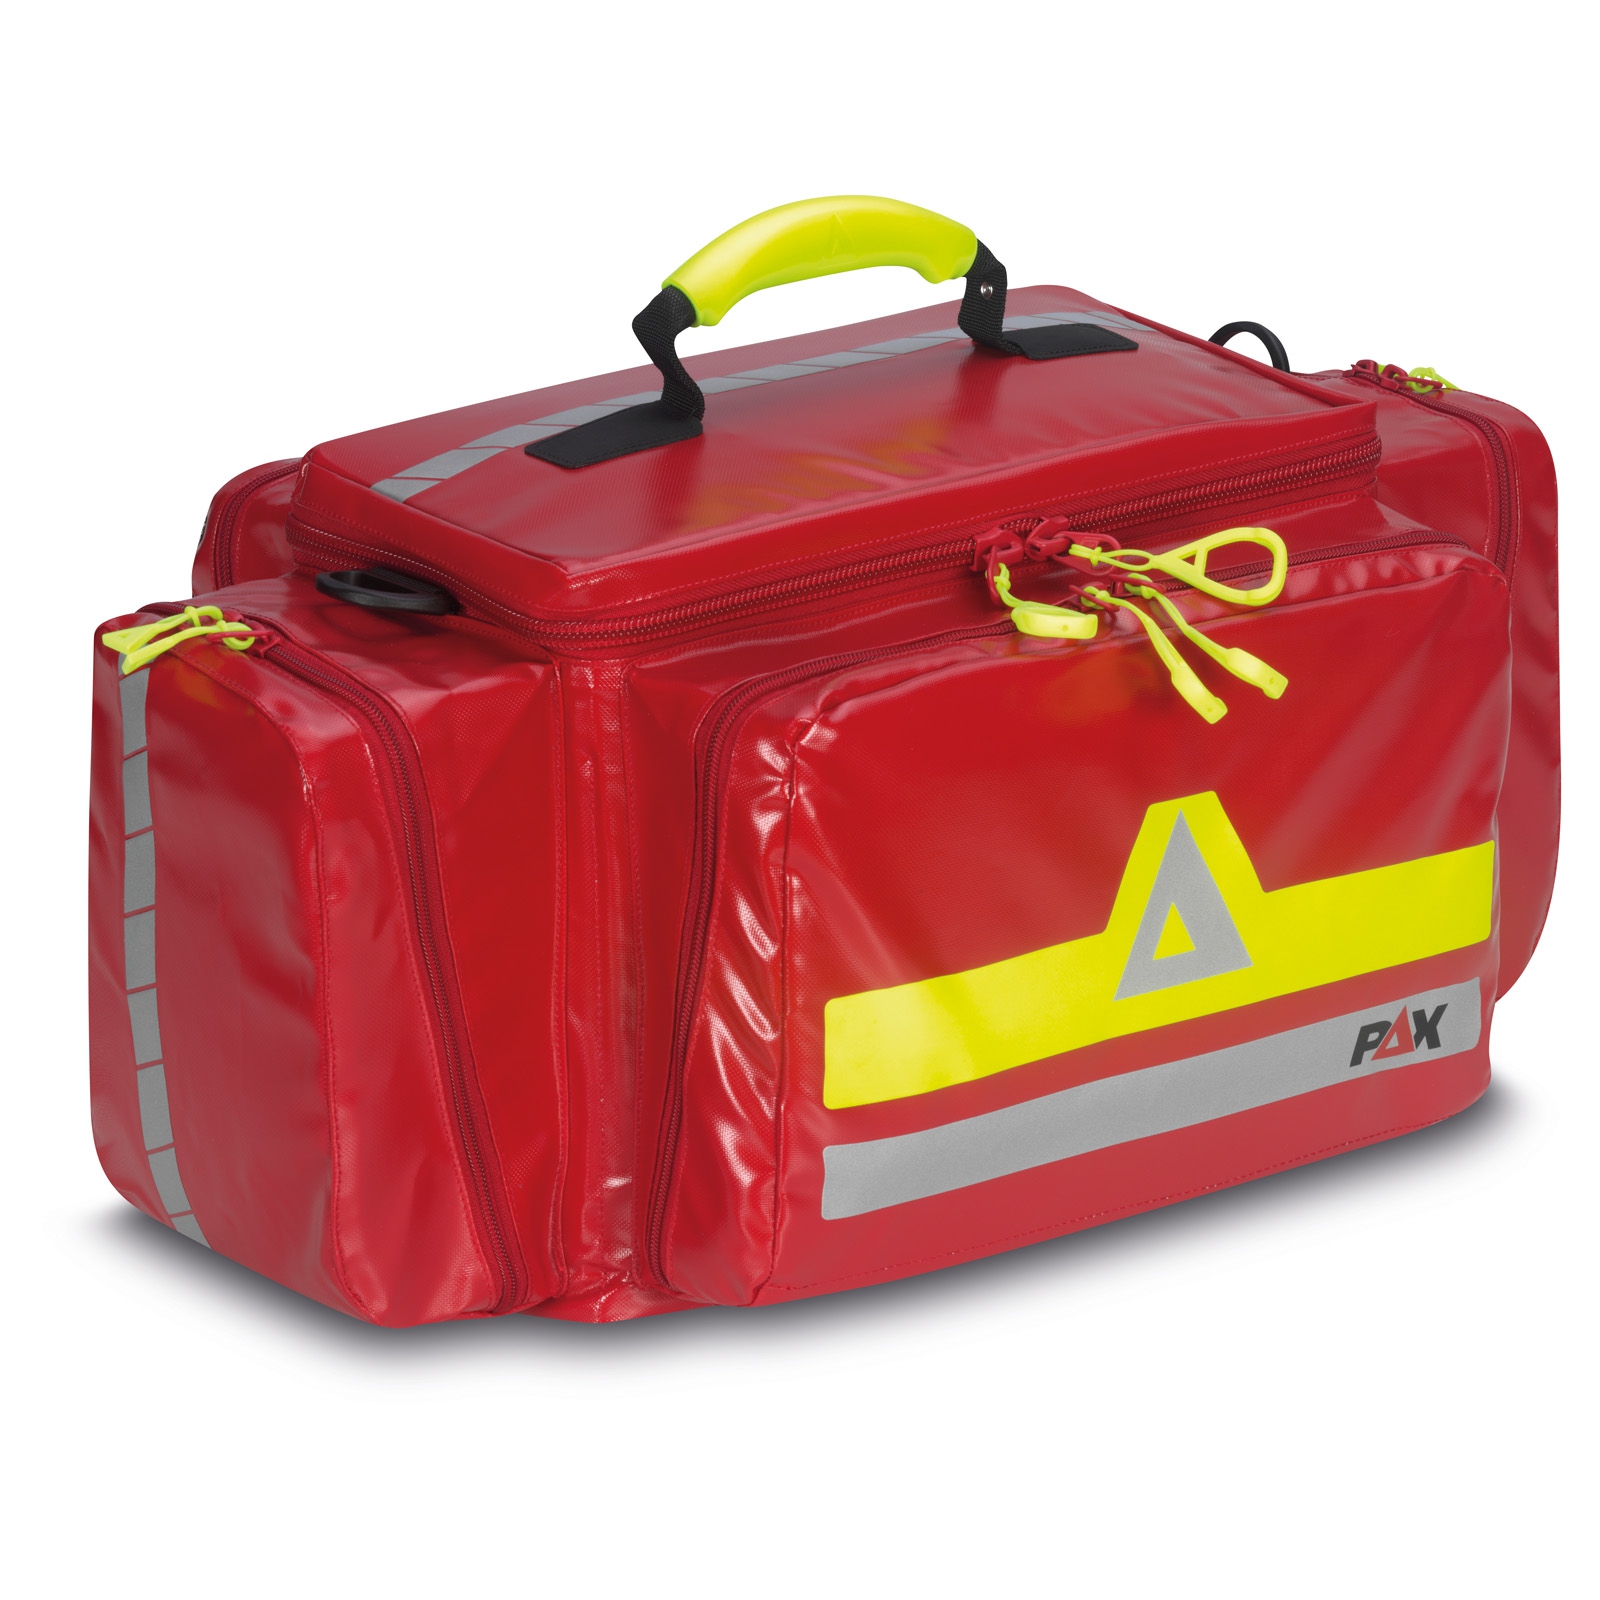 Pax Emergency bag Oldenburg